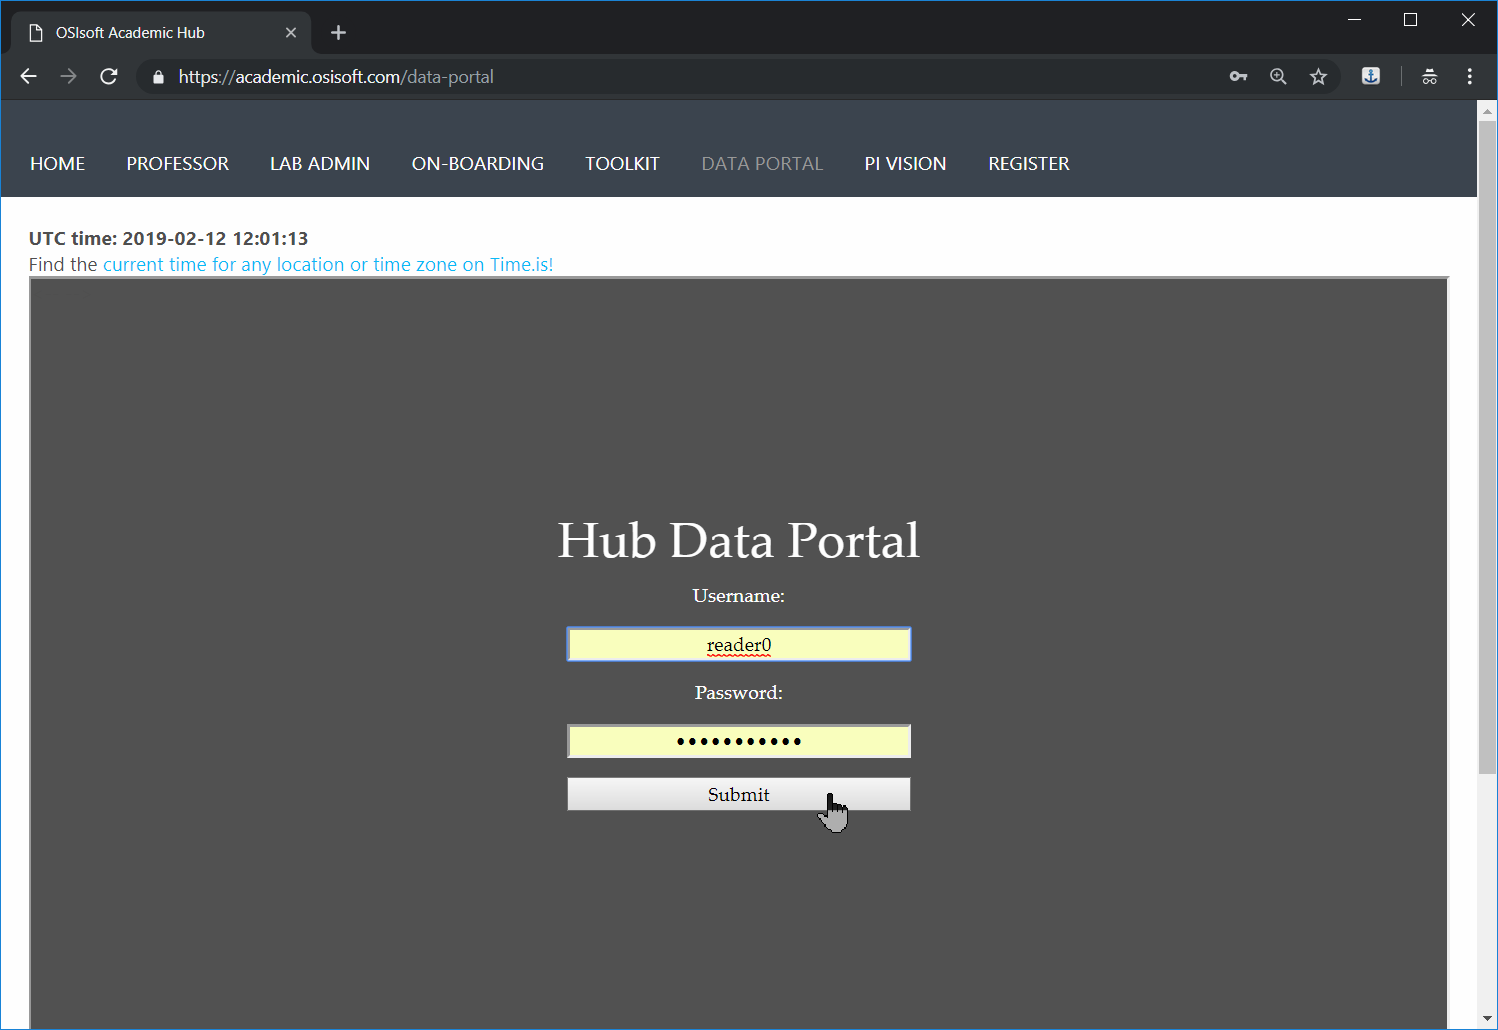 "Hub Data Portal Home"